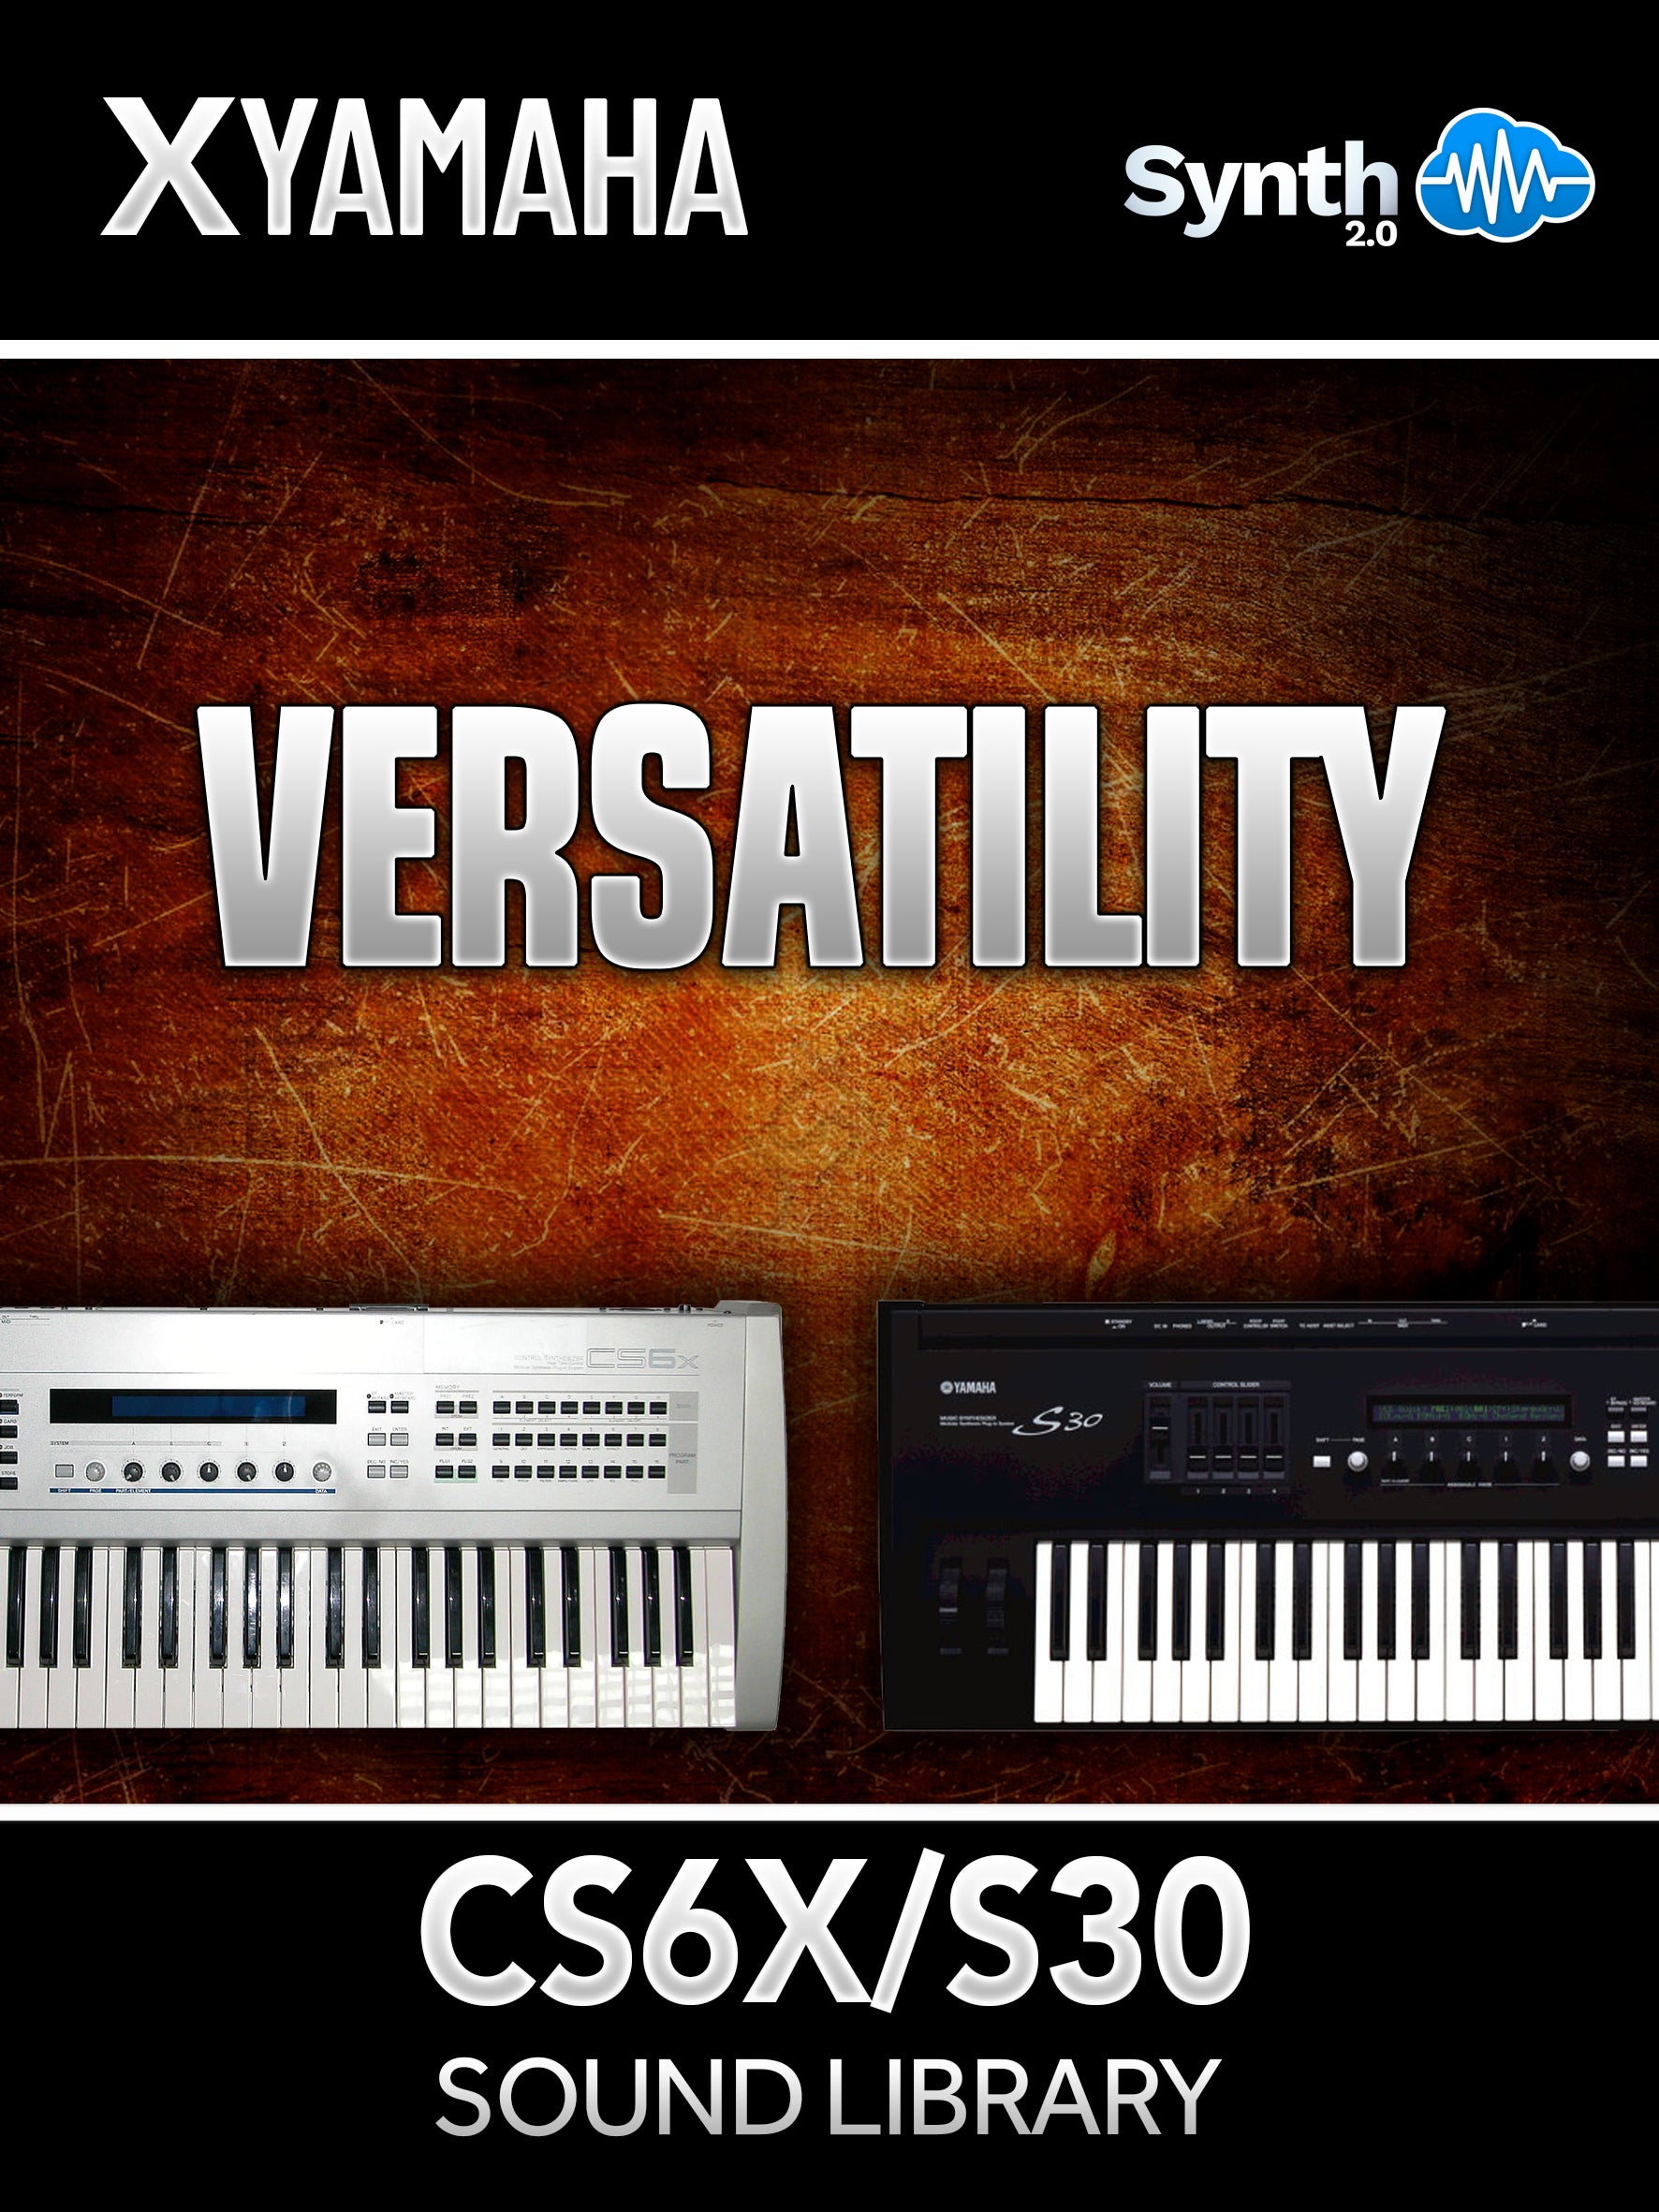 LFO103 - Versatility - Yamaha CS-6X / S30 ( 128 presets )